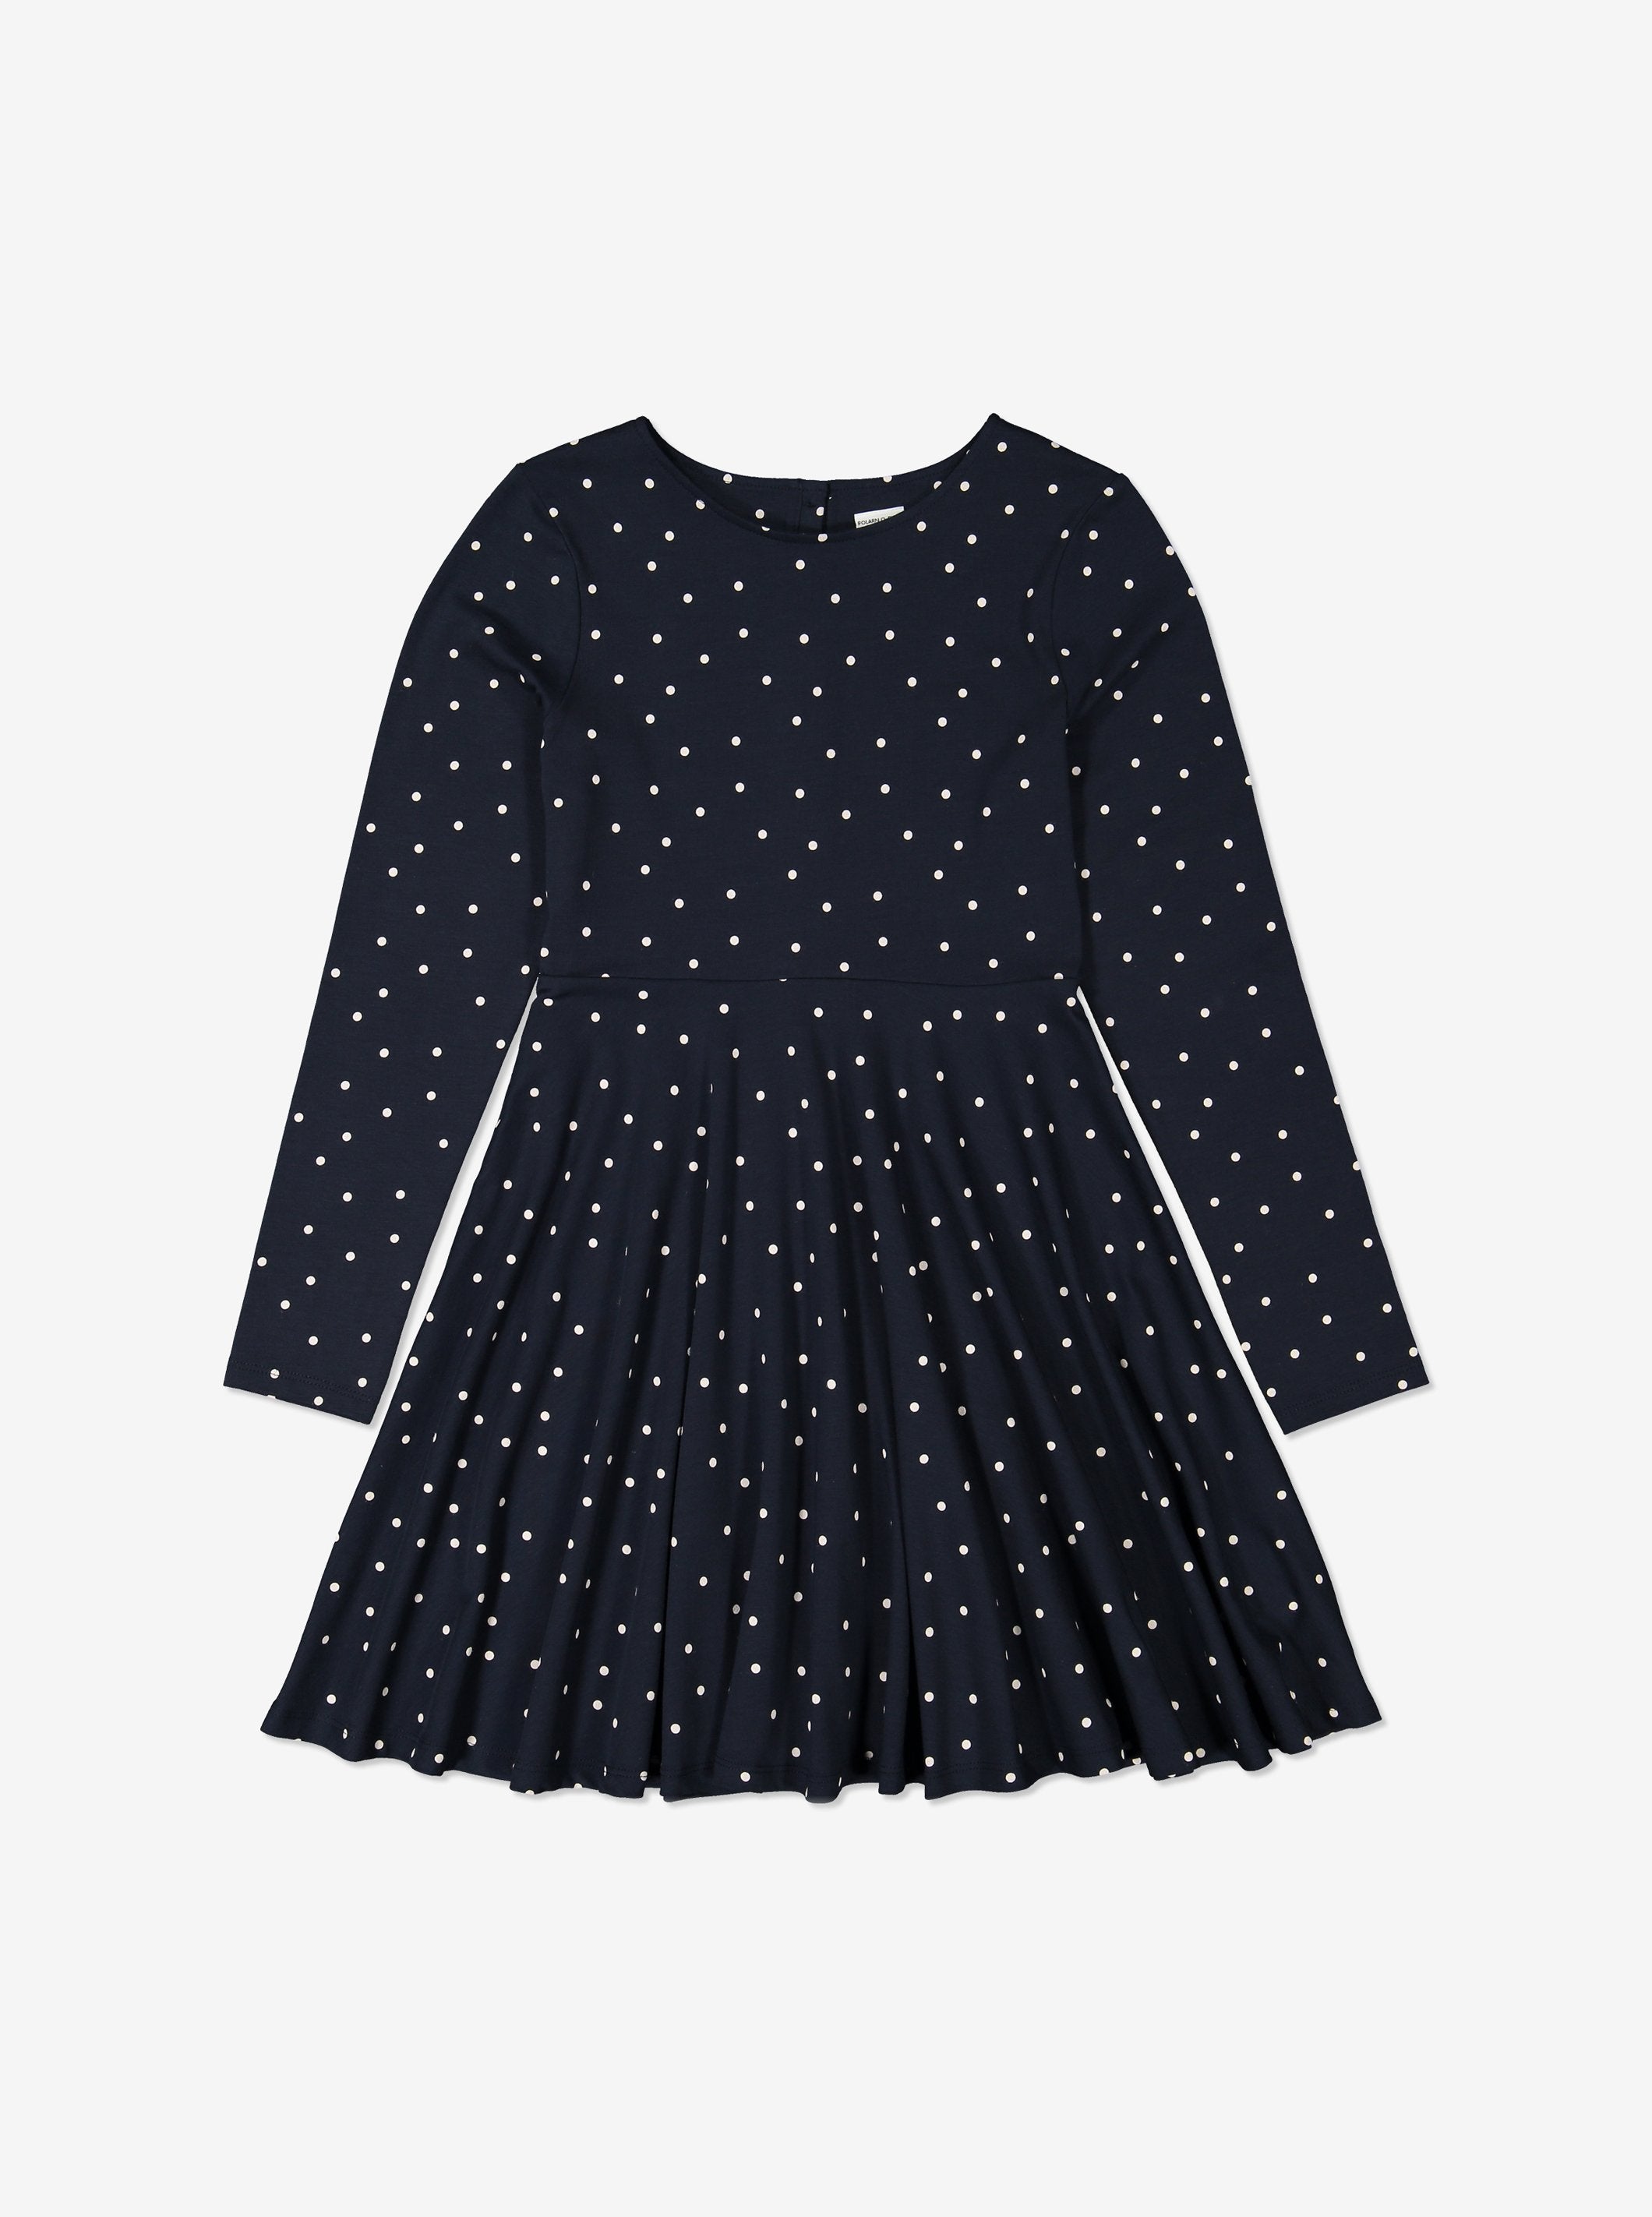 Polka Dot Print Kids Dress